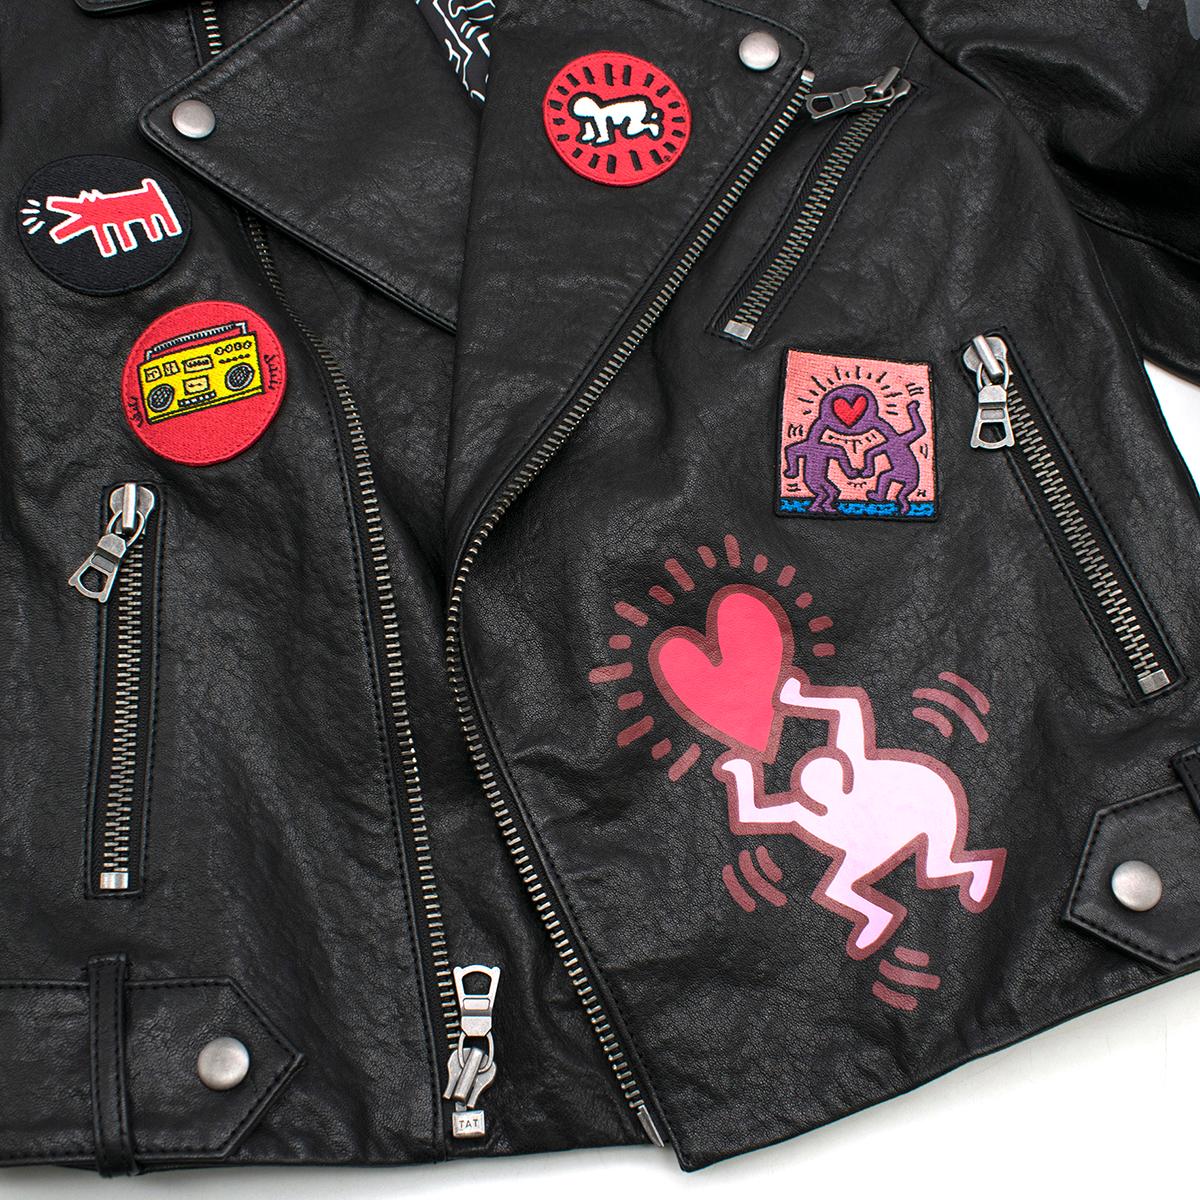 Keith Haring x Alice + Olivia Cody leather jacket - Current Season 